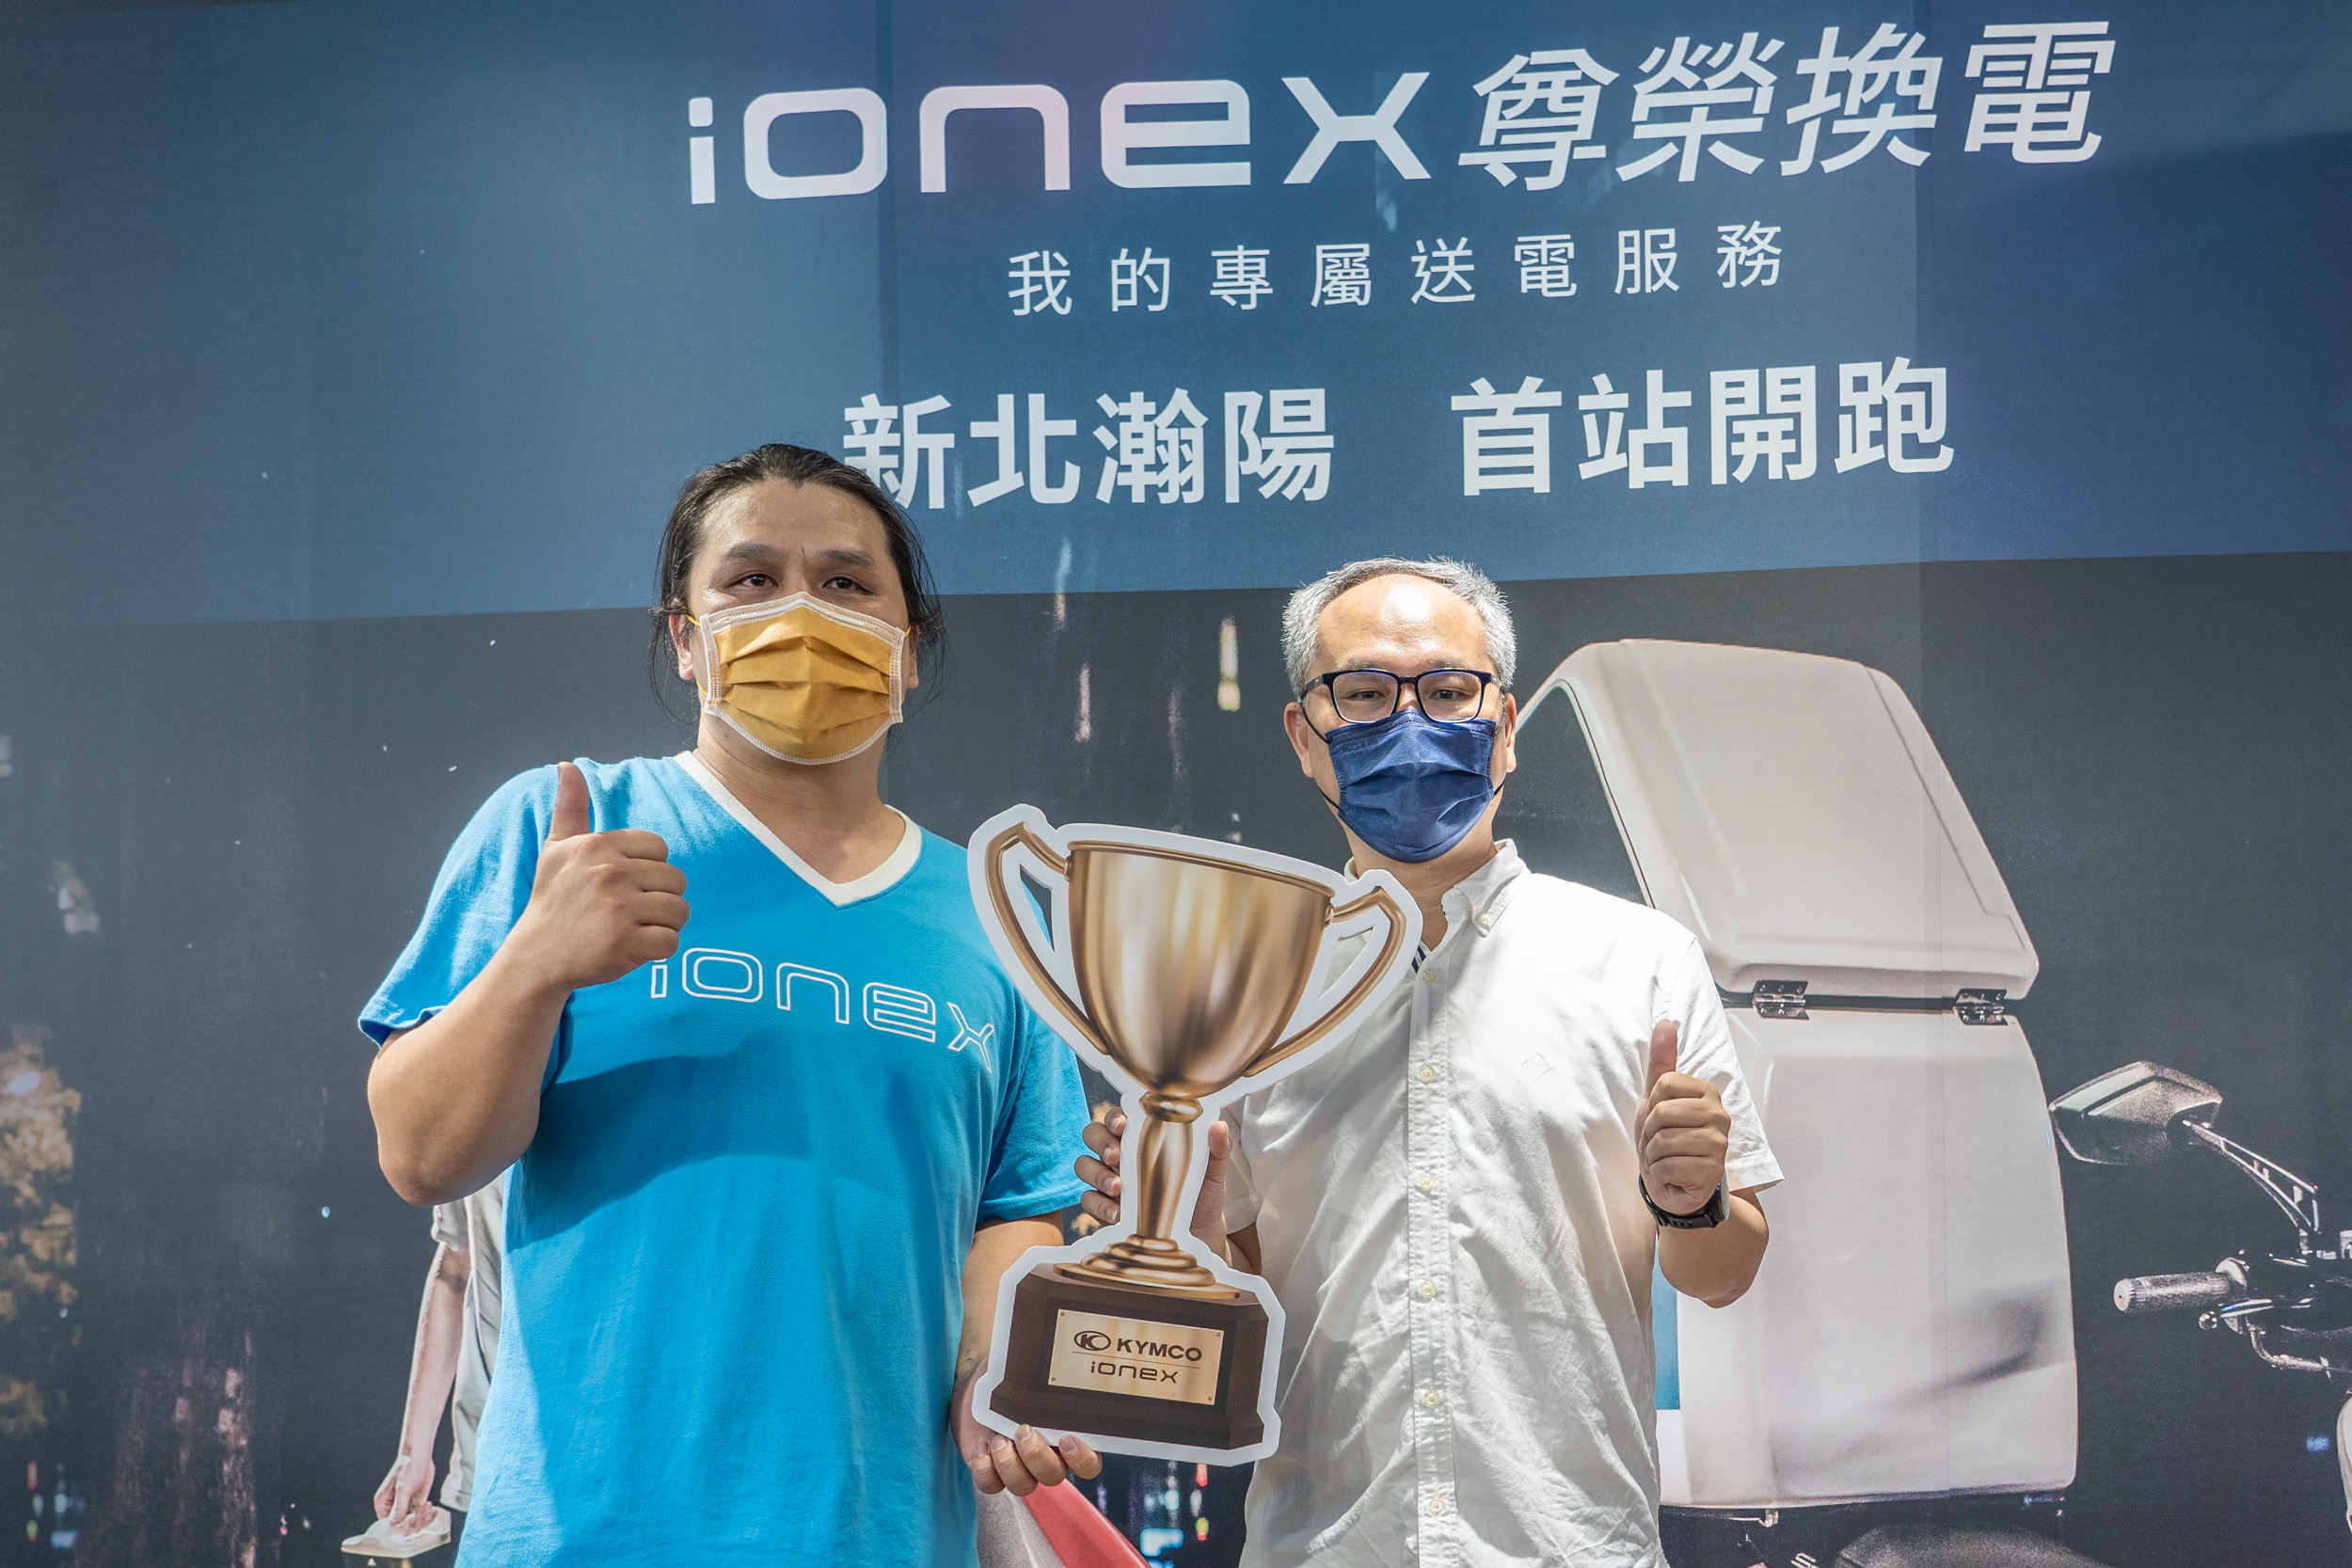 Ionex 新北瀚陽店為目前全台 Ionex 3.0 車款銷售冠軍的經銷點。